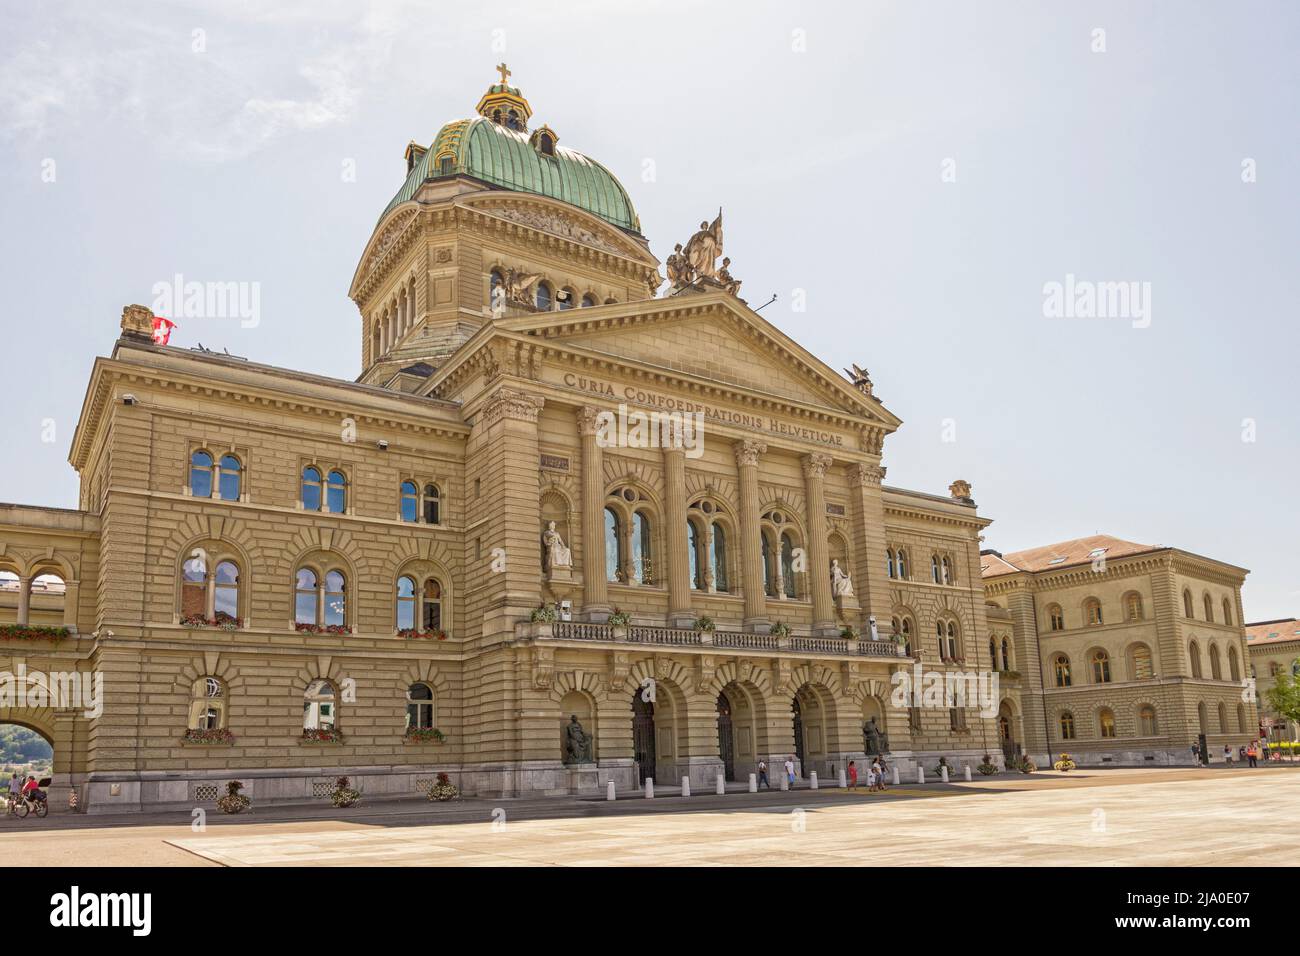 Bern, Switzerland, August 13, 2020: Facade of the Swiss parliament building at the Bundesplatz. Stock Photo